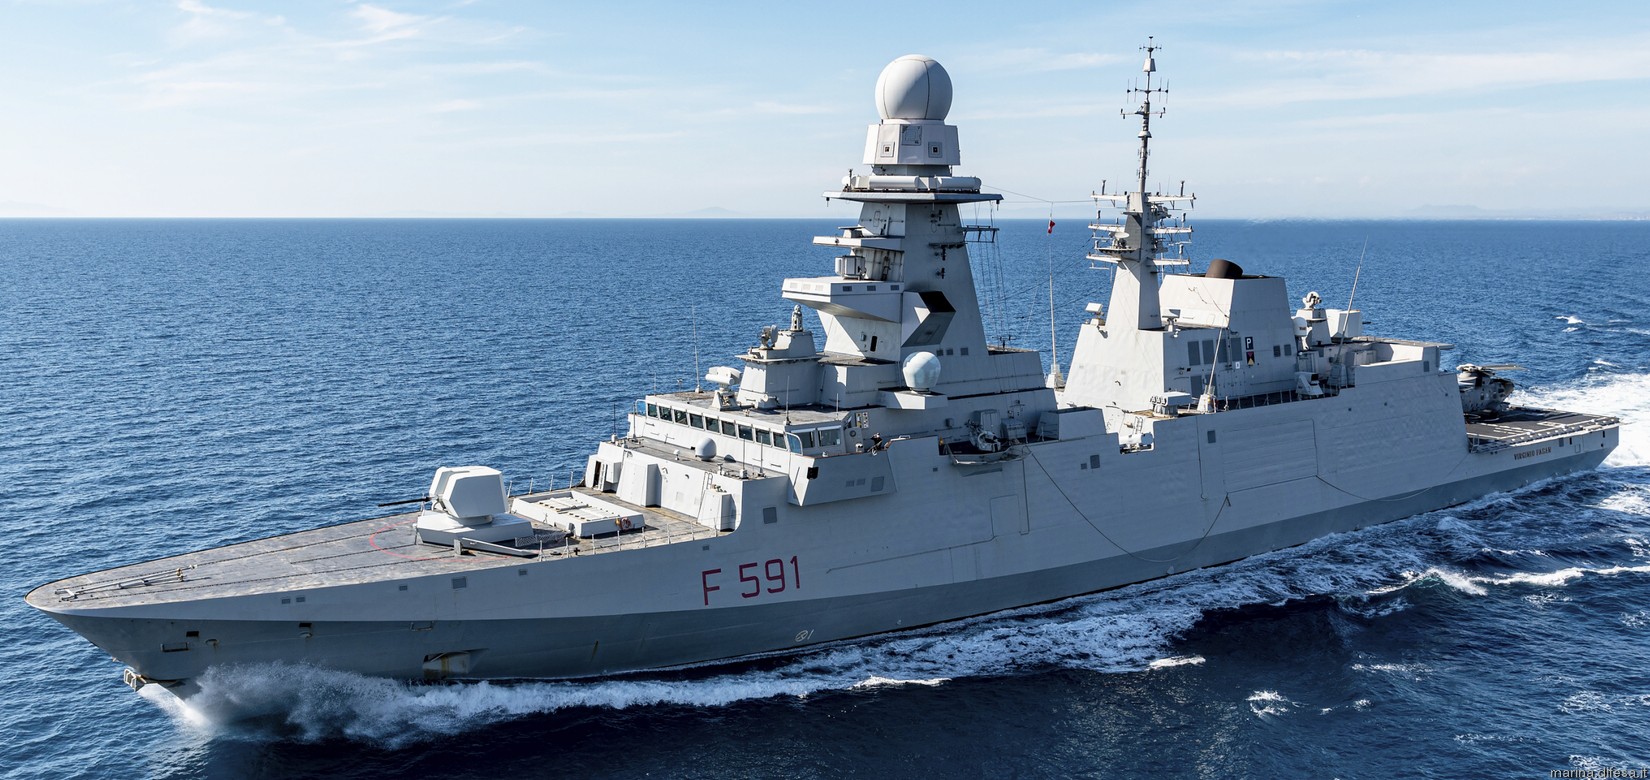 f-591 virginio fasan its nave bergamini fremm class guided missile frigate italian navy marina militare 73